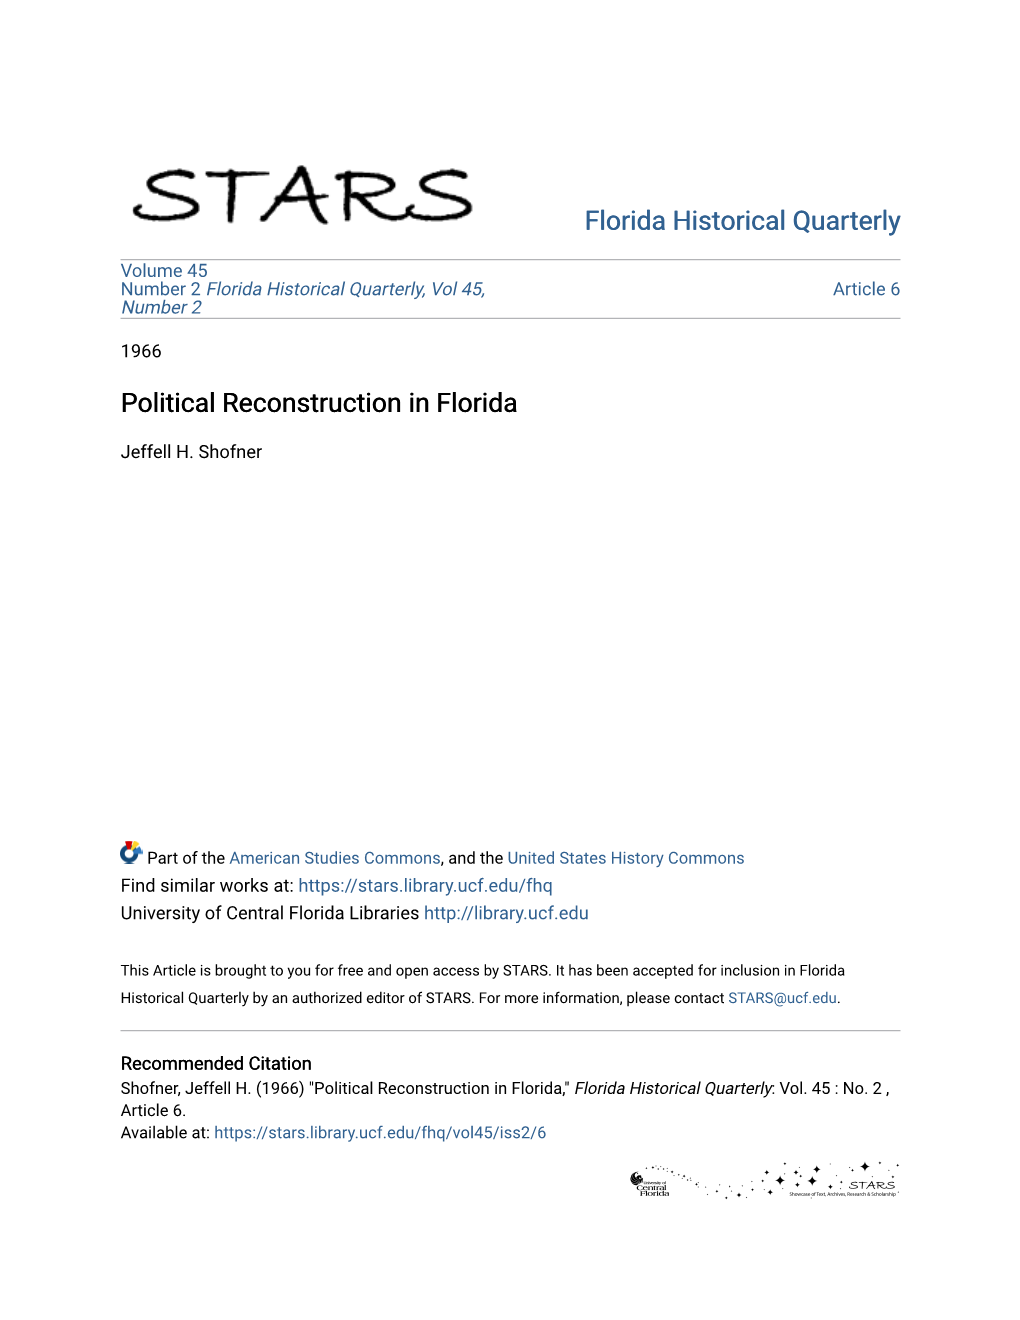 Political Reconstruction in Florida